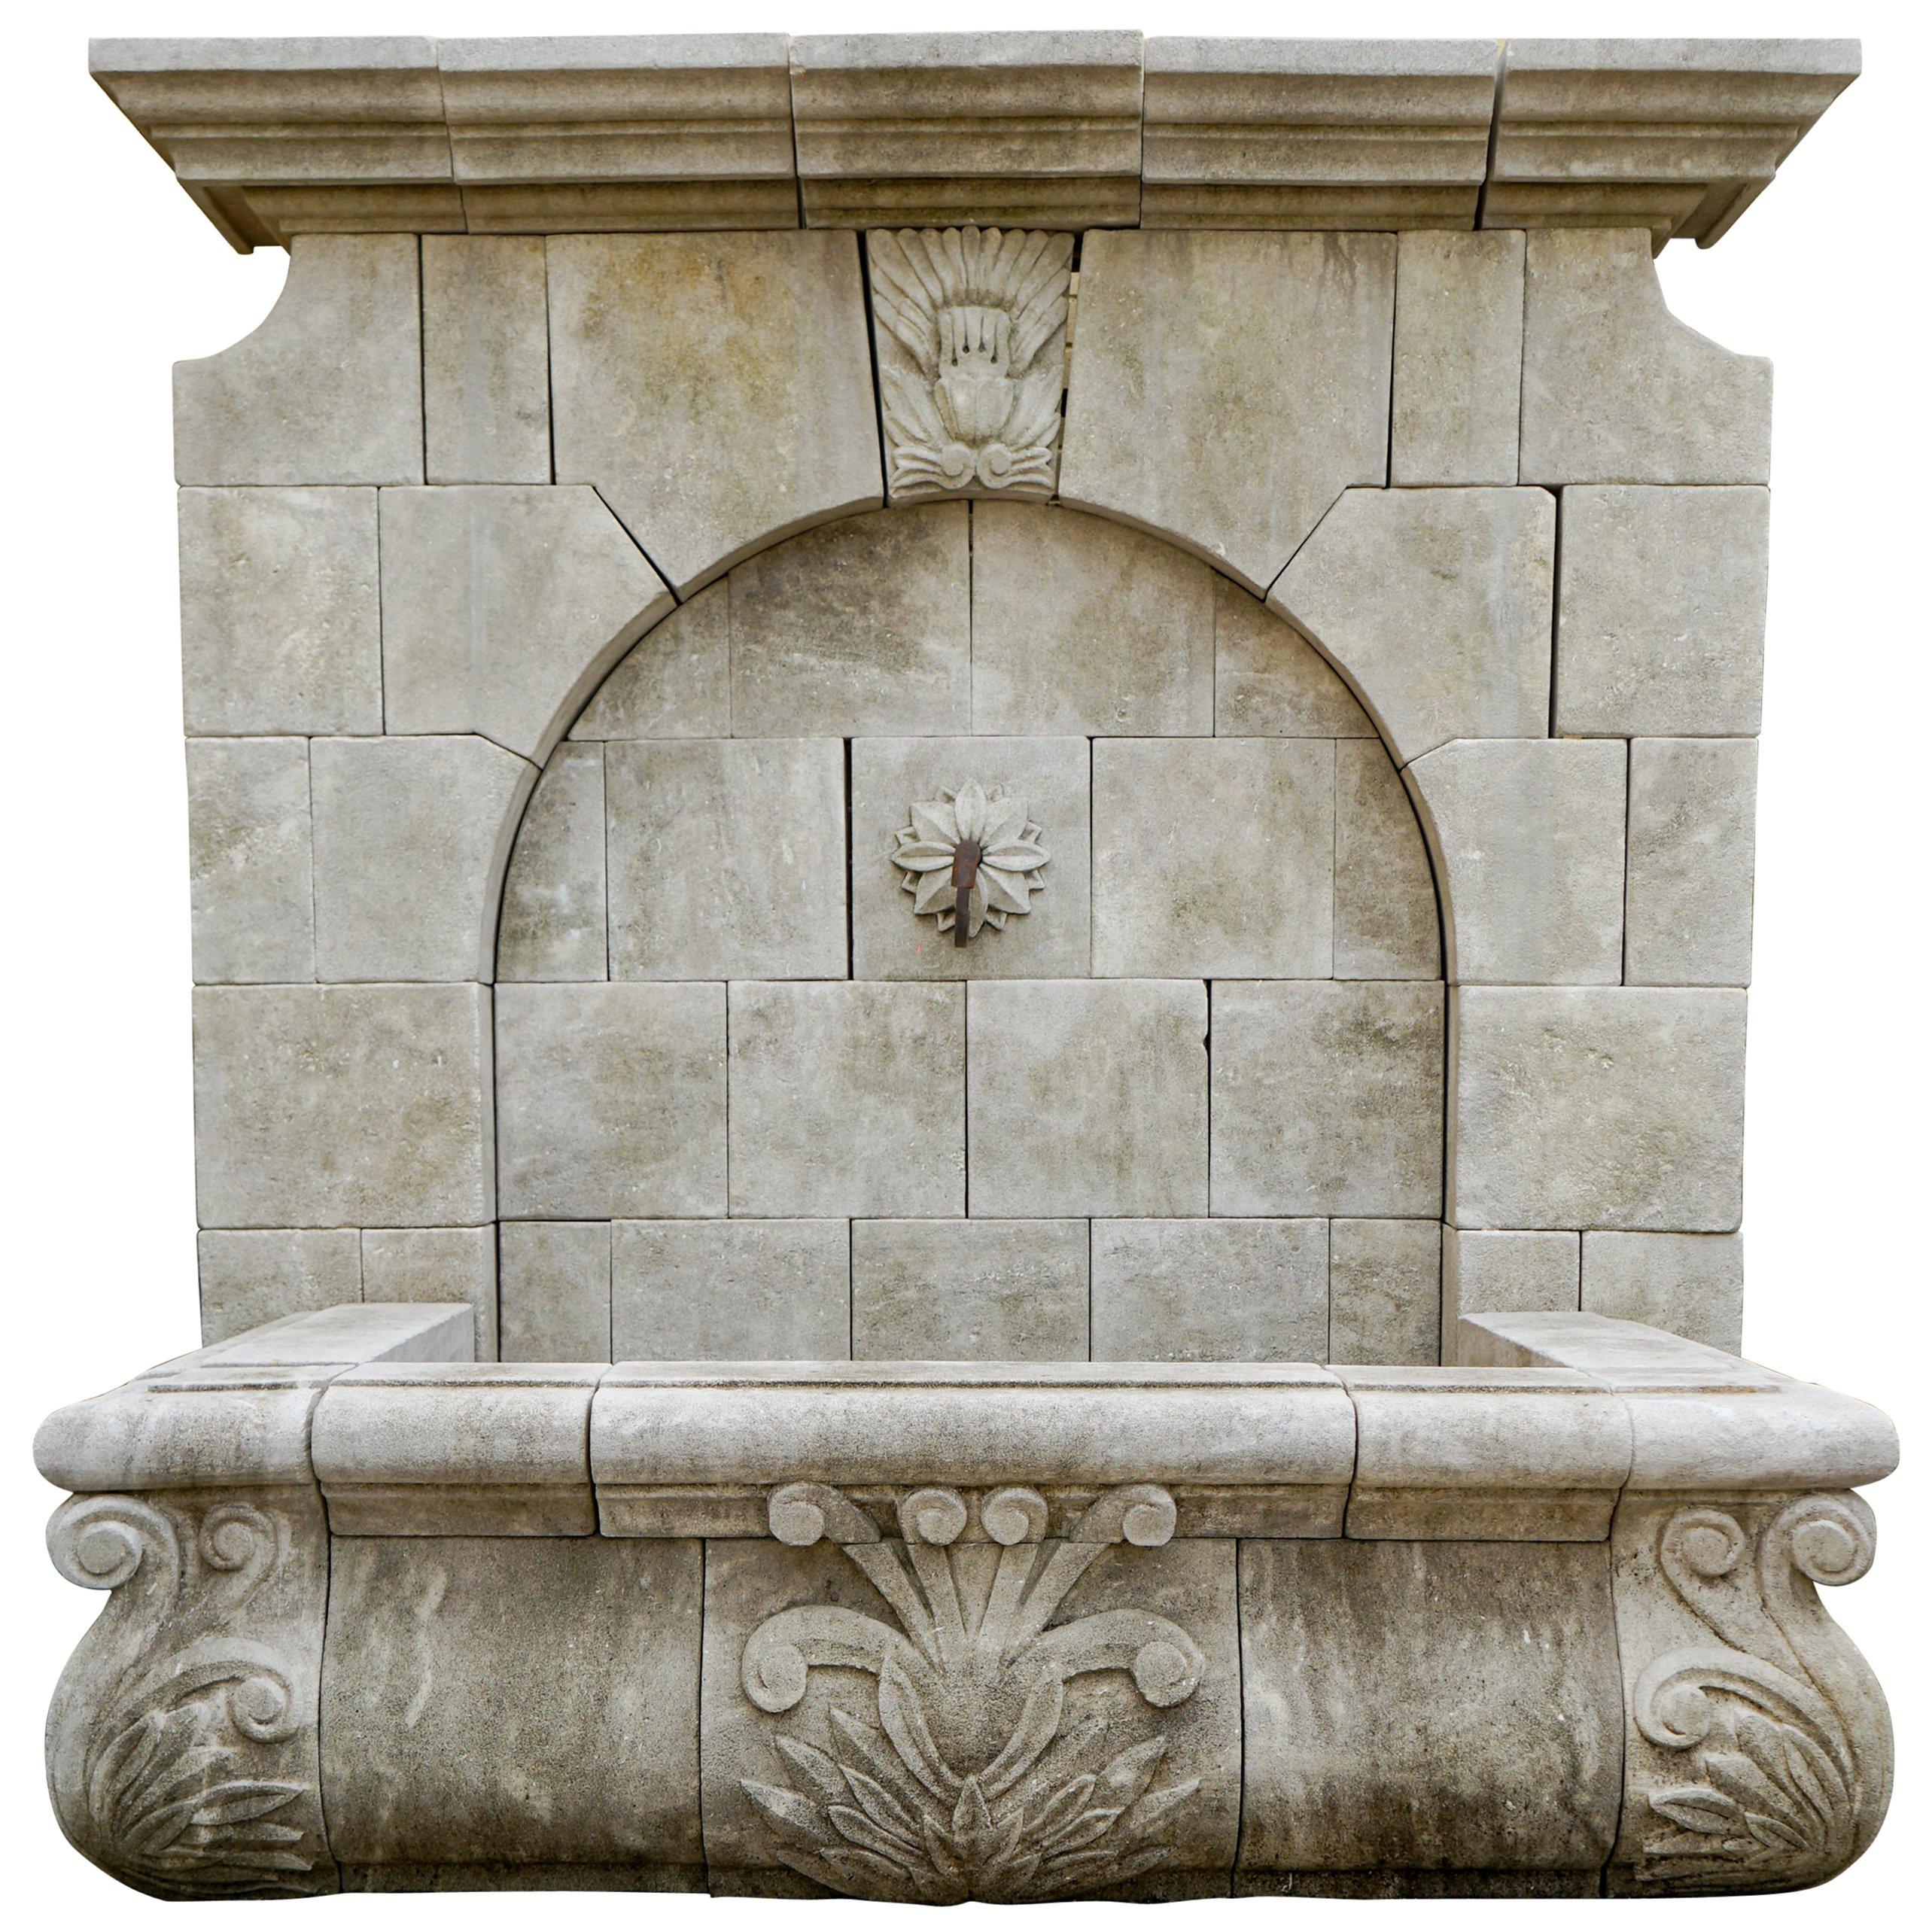 Gothic Revival Wall Fountain